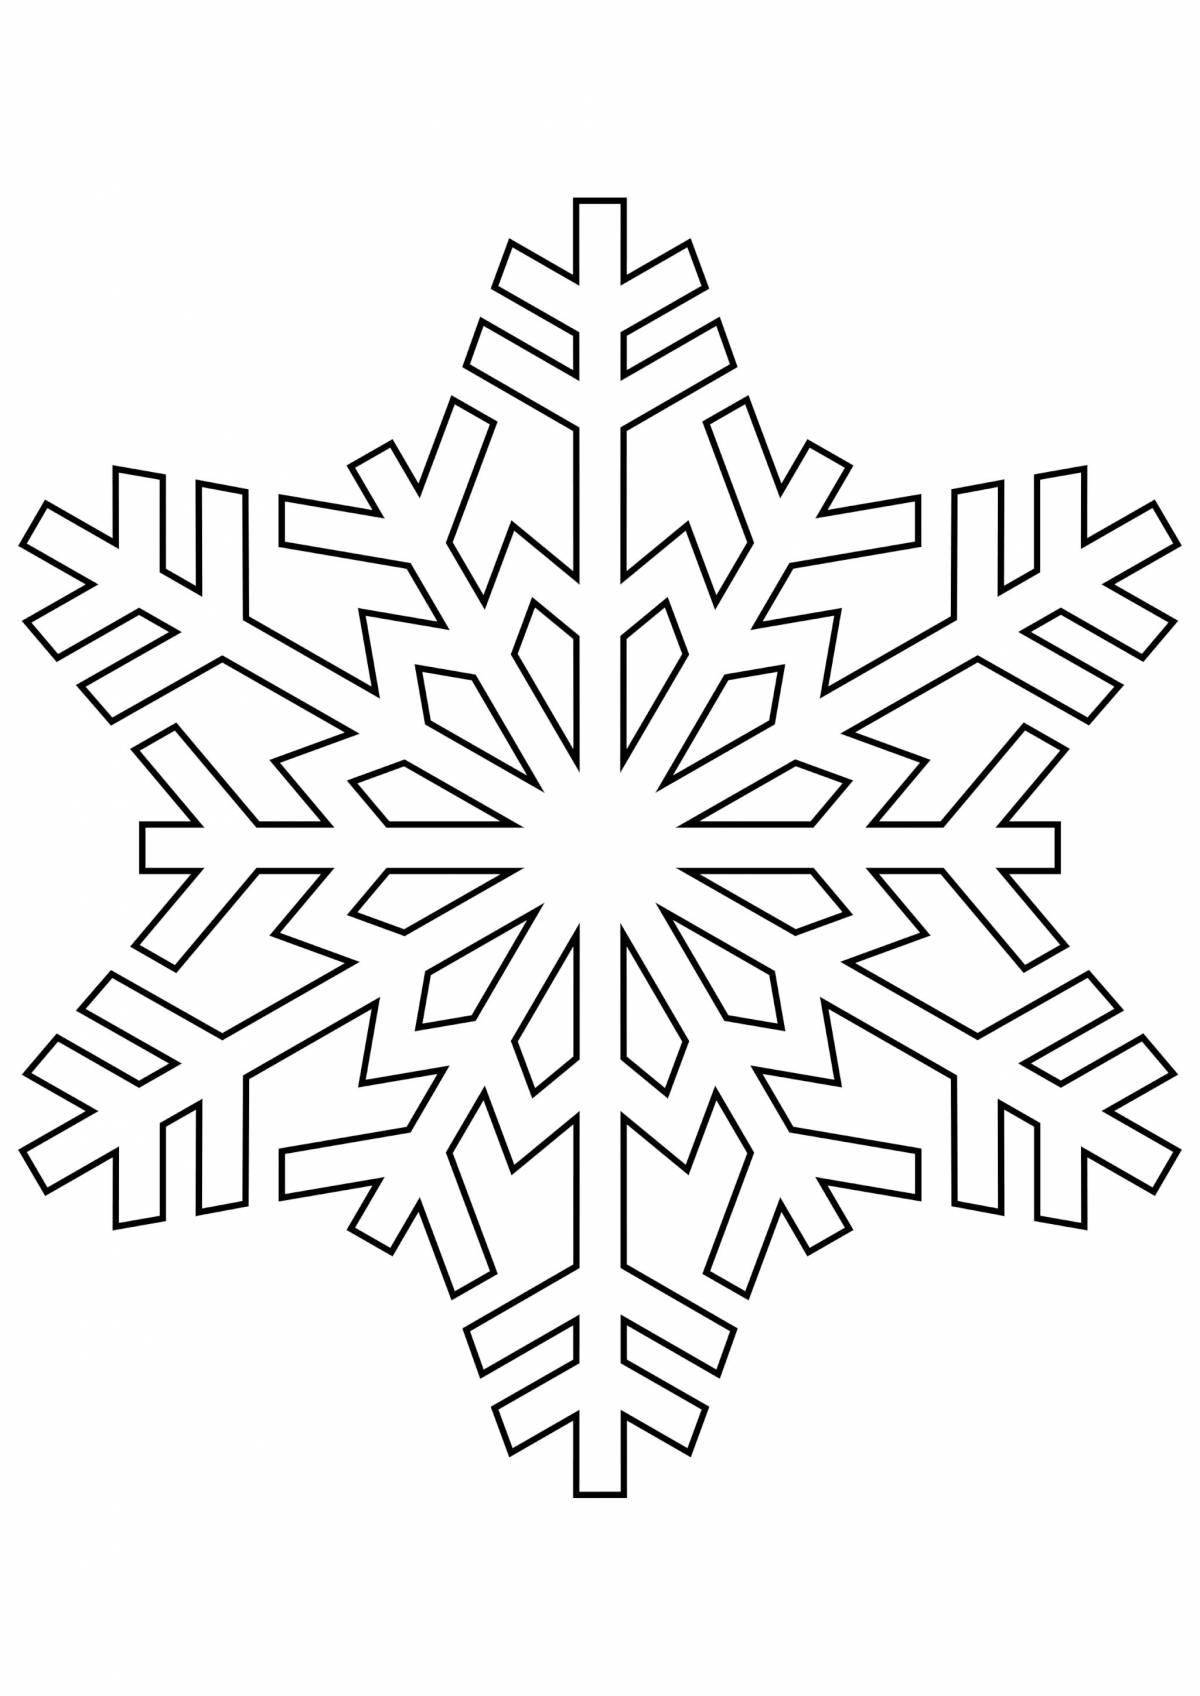 Coloring majestic snowflake